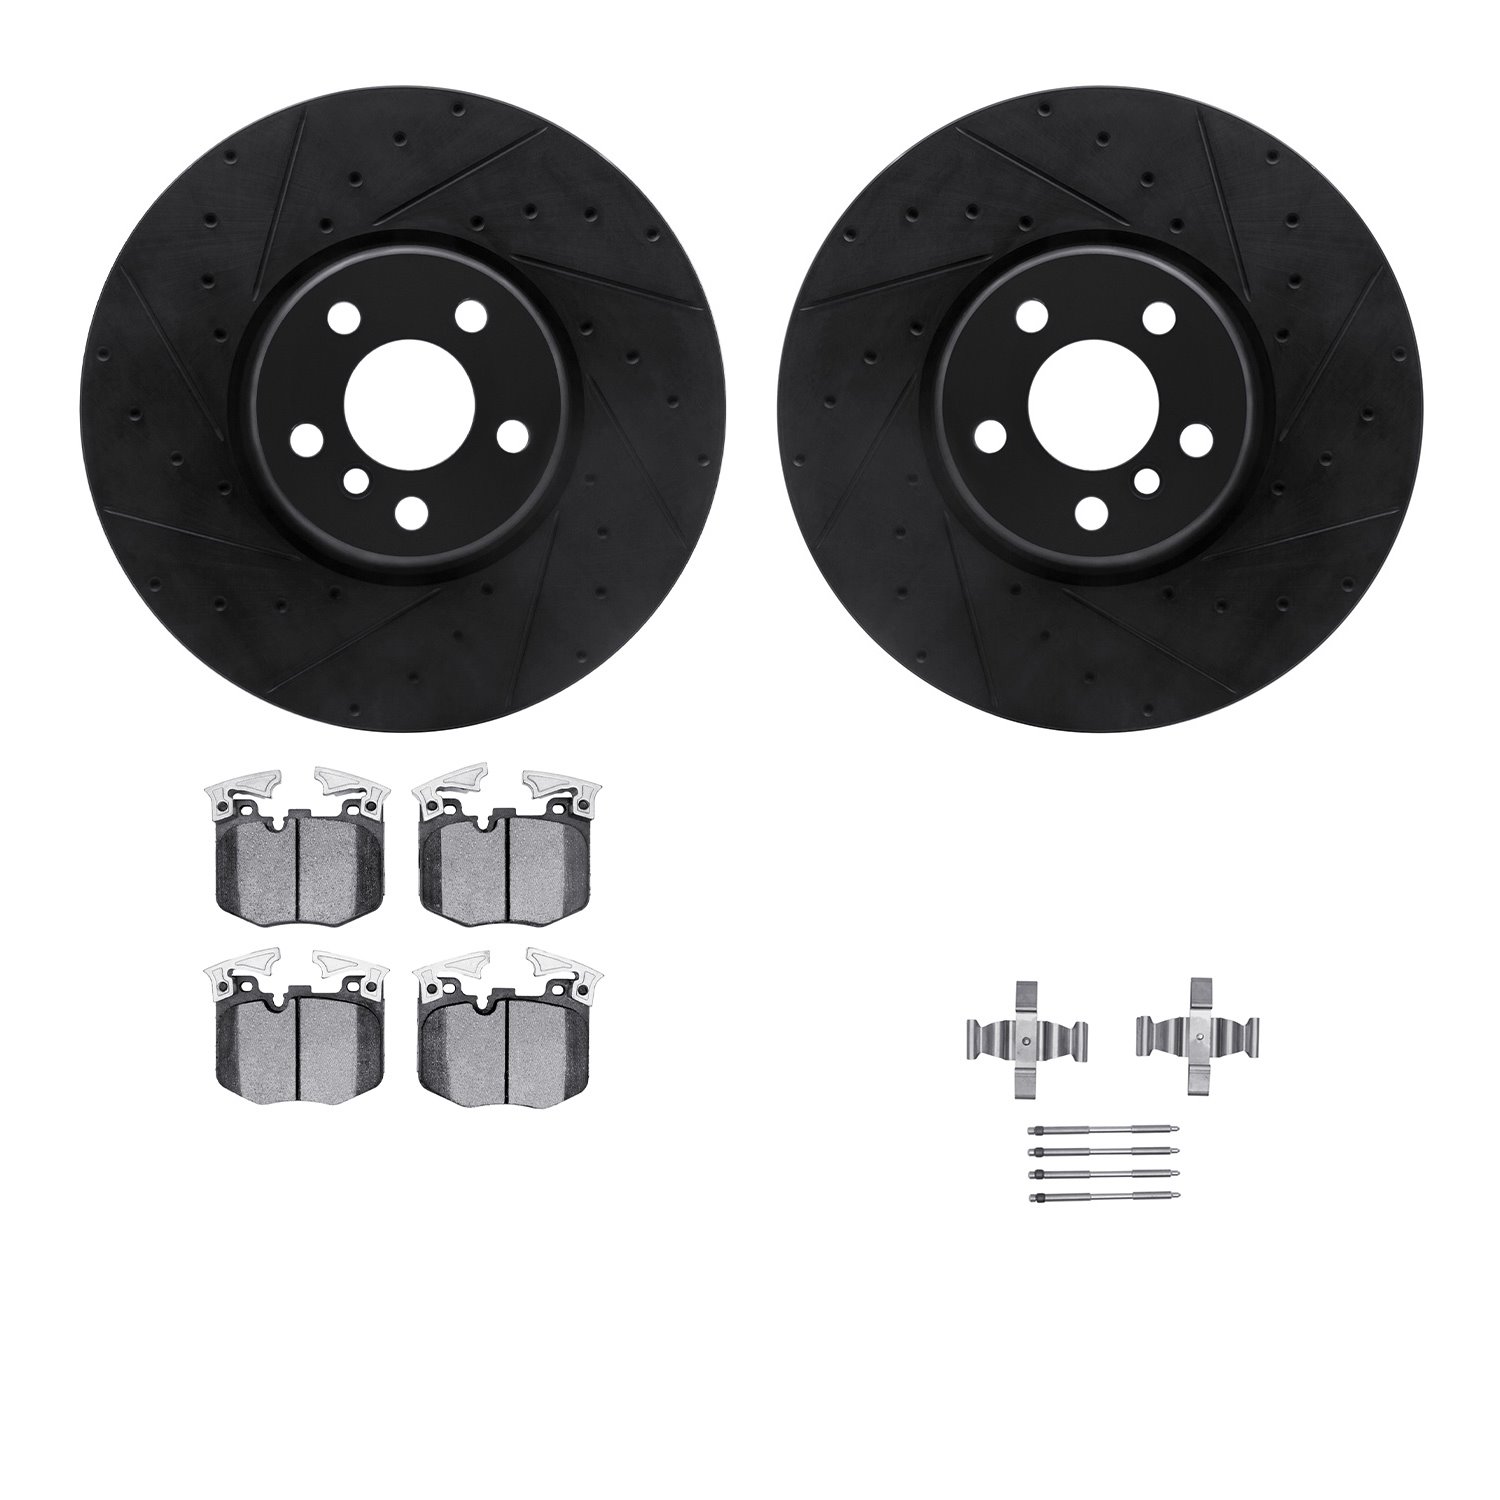 8612-31105 Drilled/Slotted Brake Rotors w/5000 Euro Ceramic Brake Pads Kit & Hardware [Black], Fits Select Multiple Makes/Models